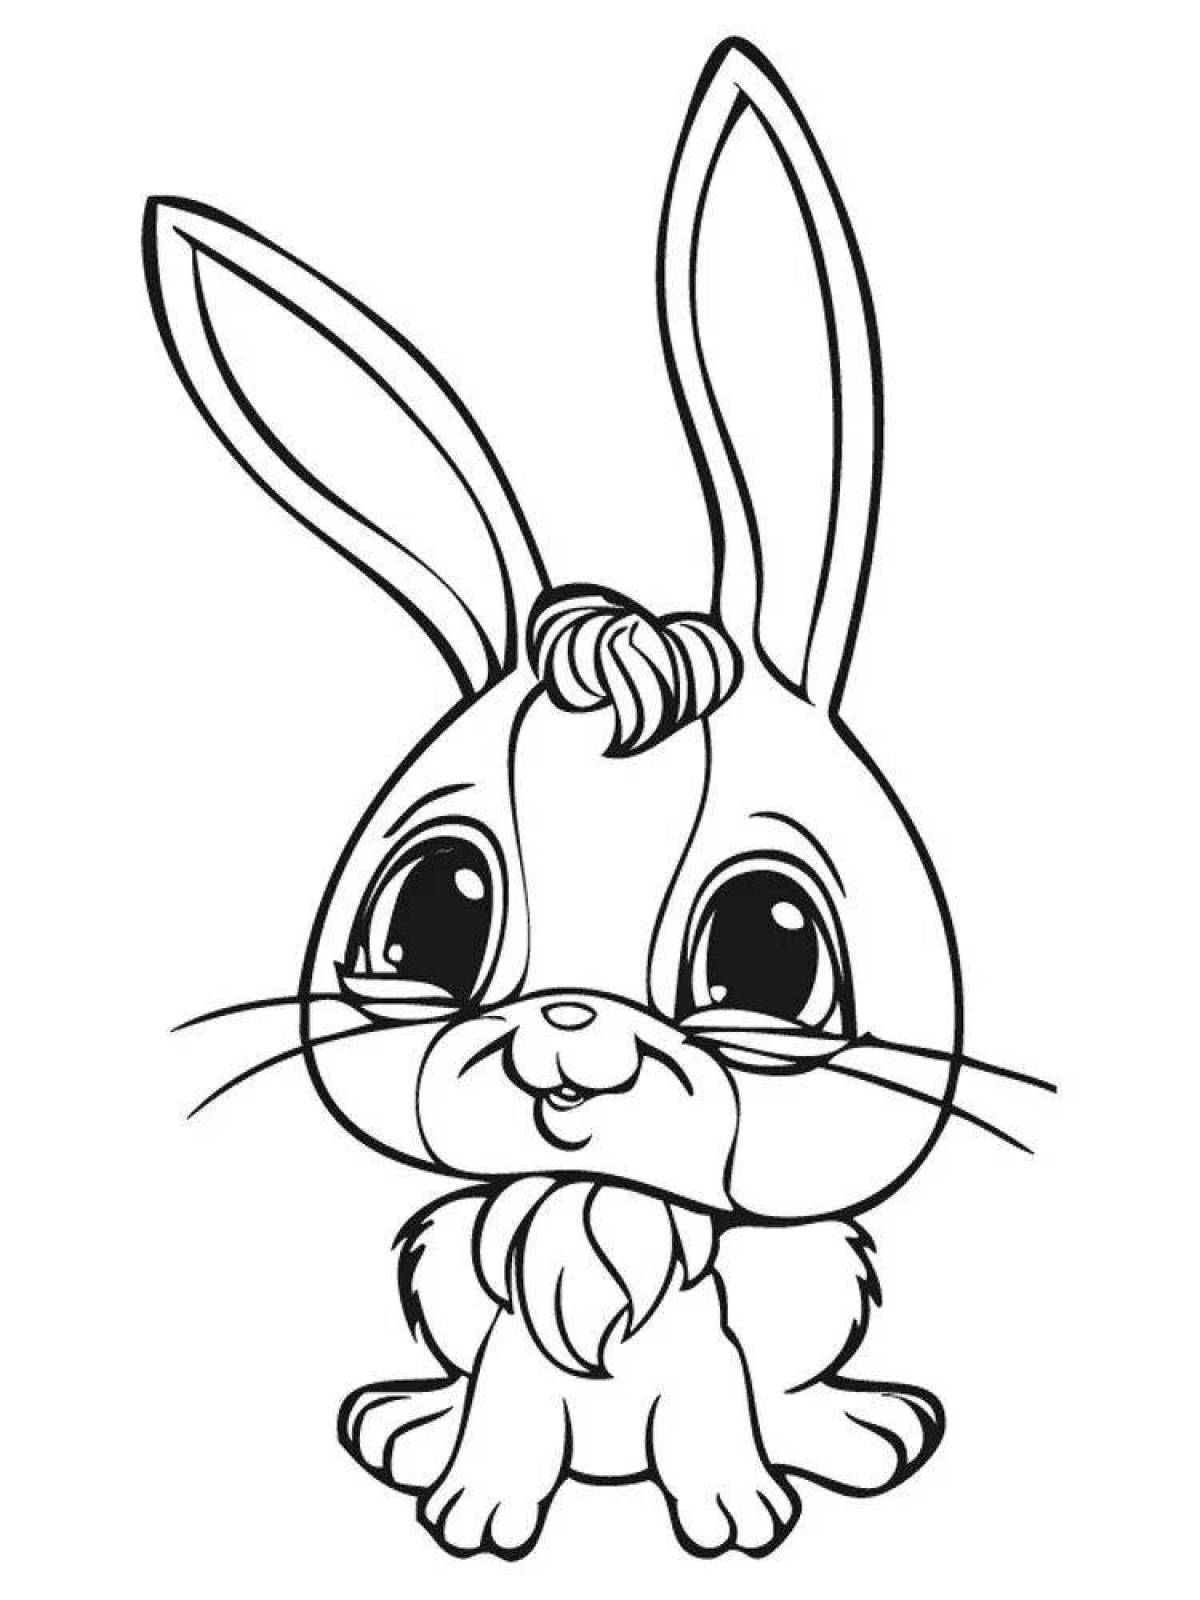 Little rabbit coloring page